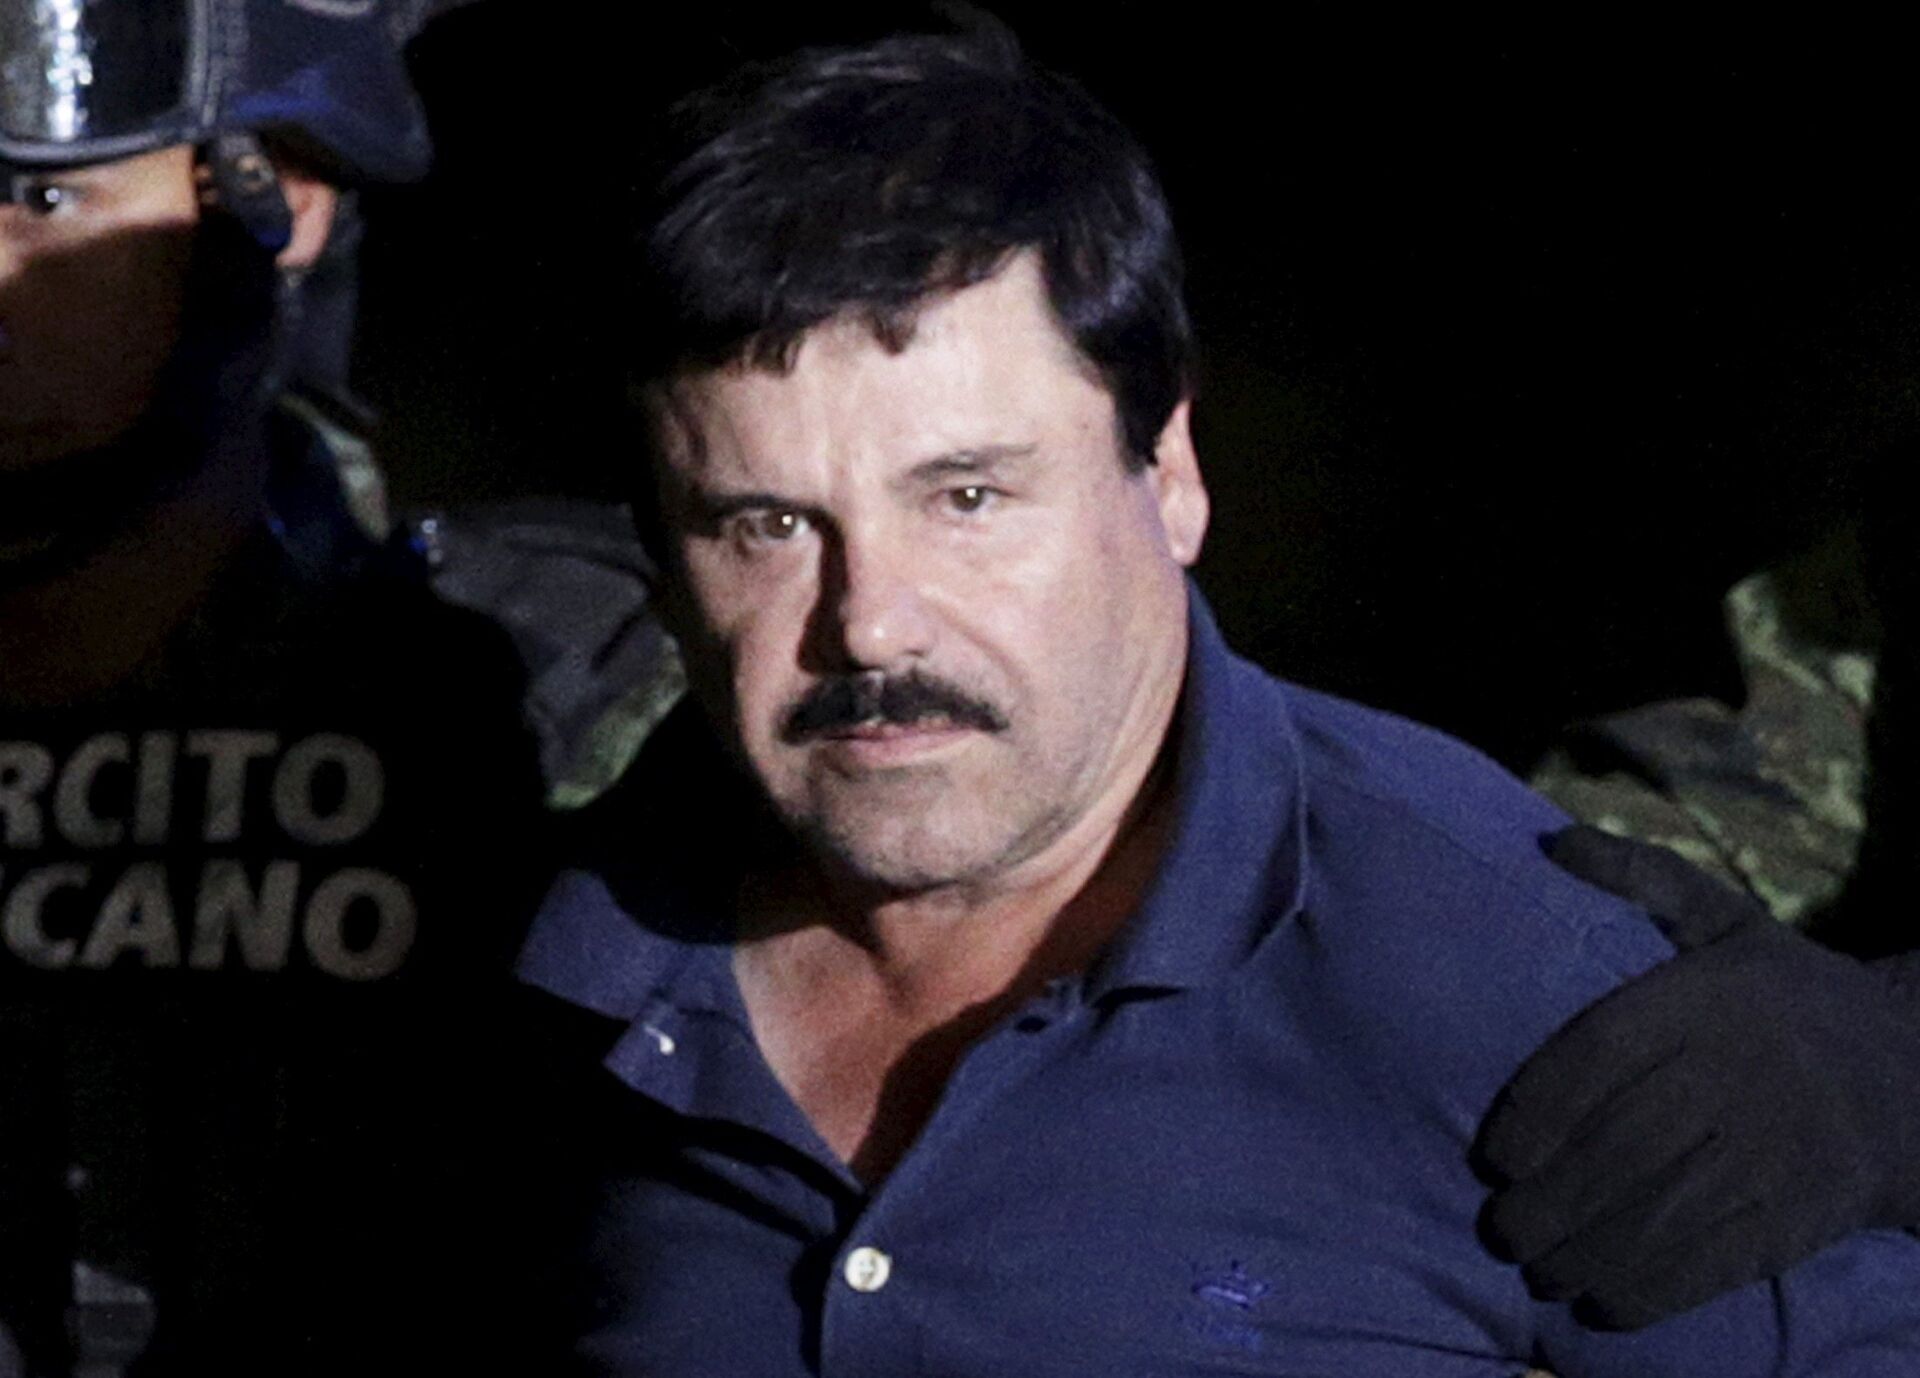 Esposa do traficante mexicano 'El Chapo' é presa na Virgínia (EUA) - Sputnik Brasil, 1920, 22.02.2021